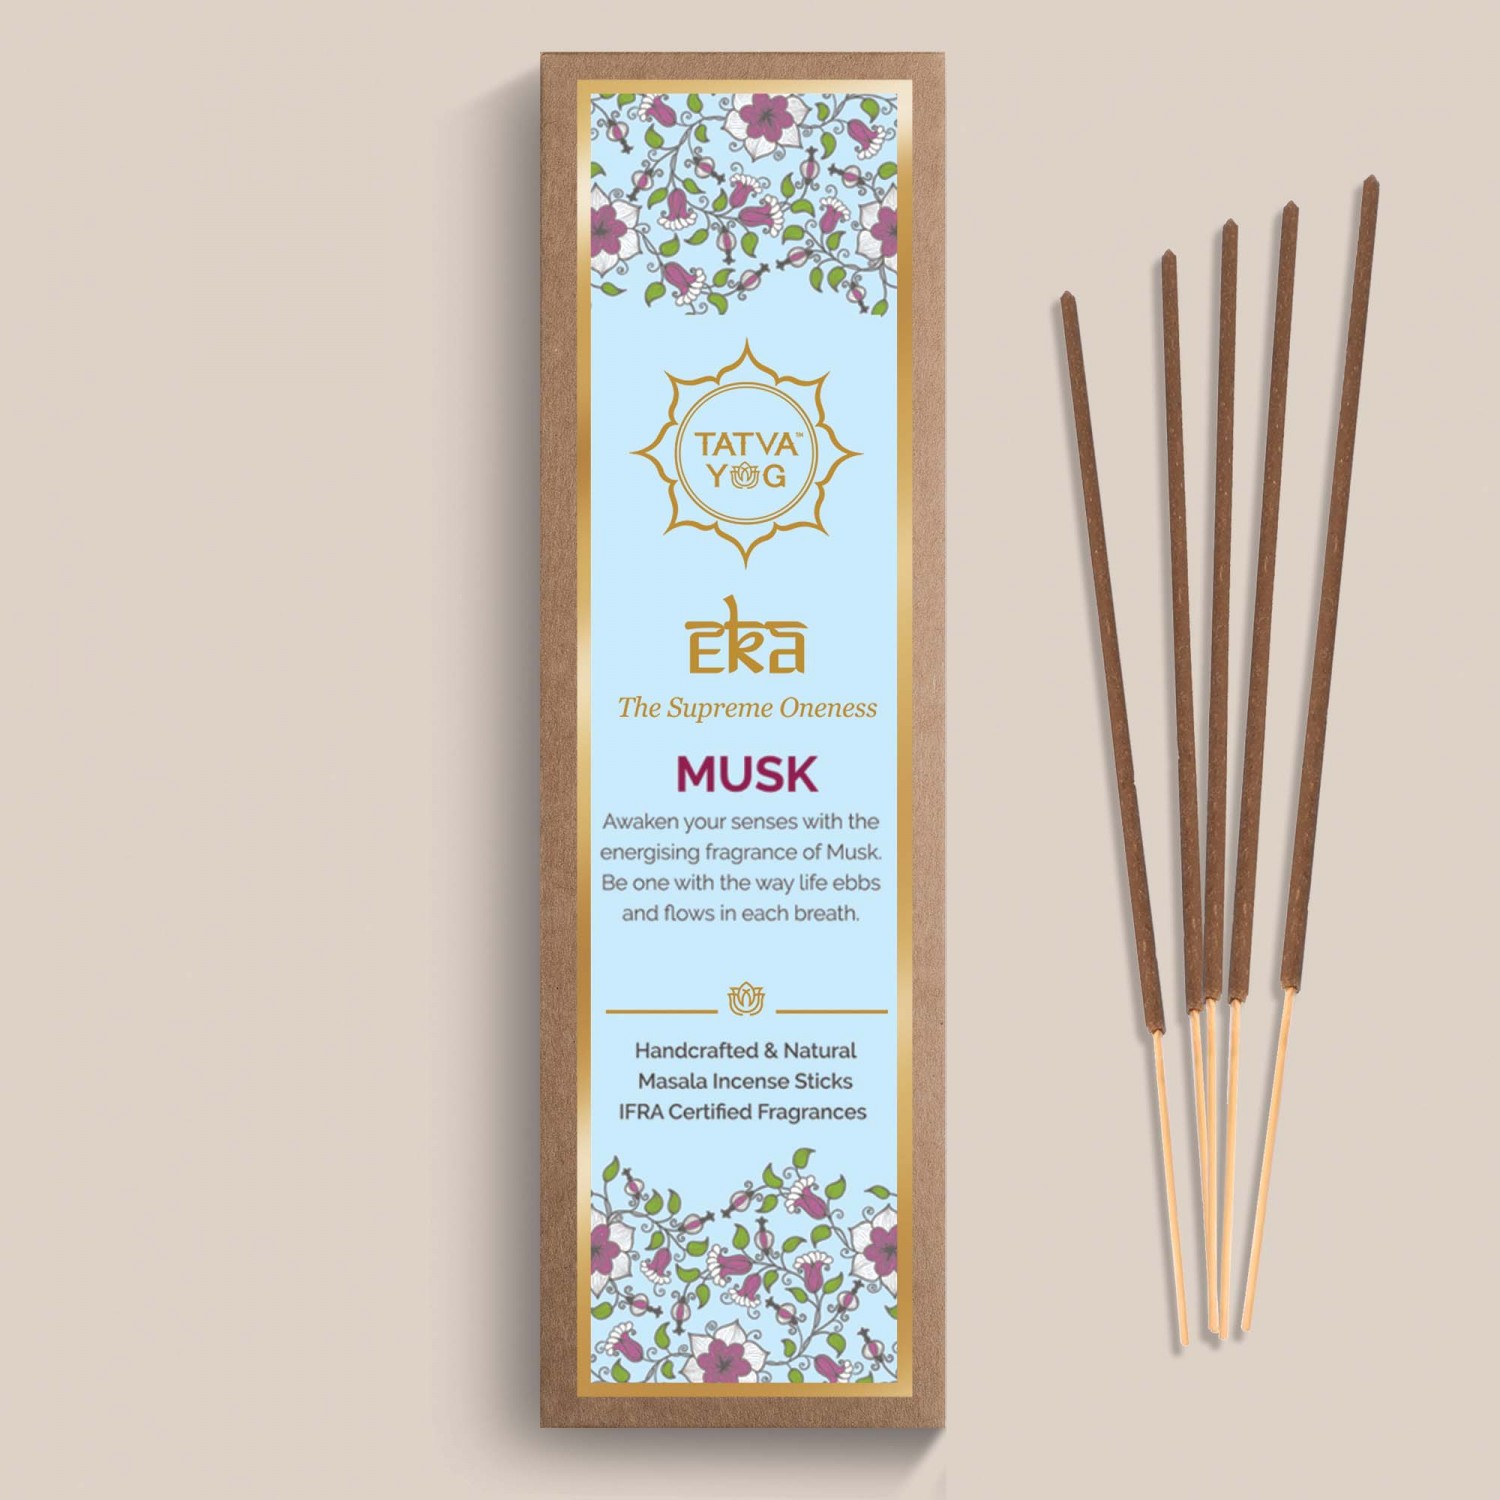 eka---musk-handcrafted-&-natural-masala-incense-sticks